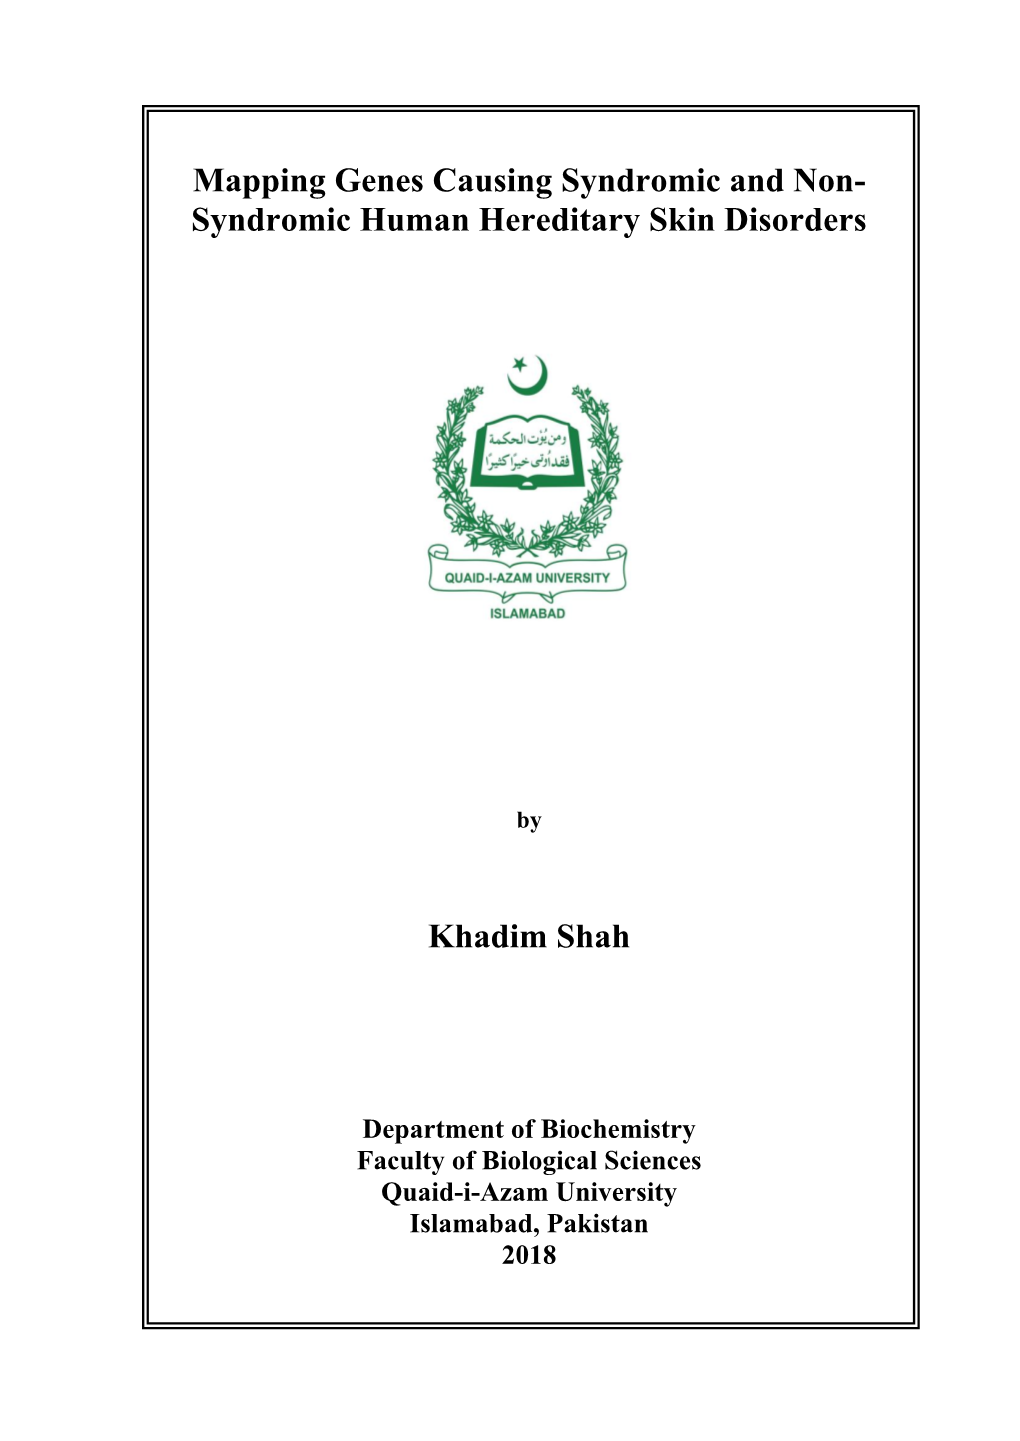 Syndromic Human Hereditary Skin Disorders Khadim Shah